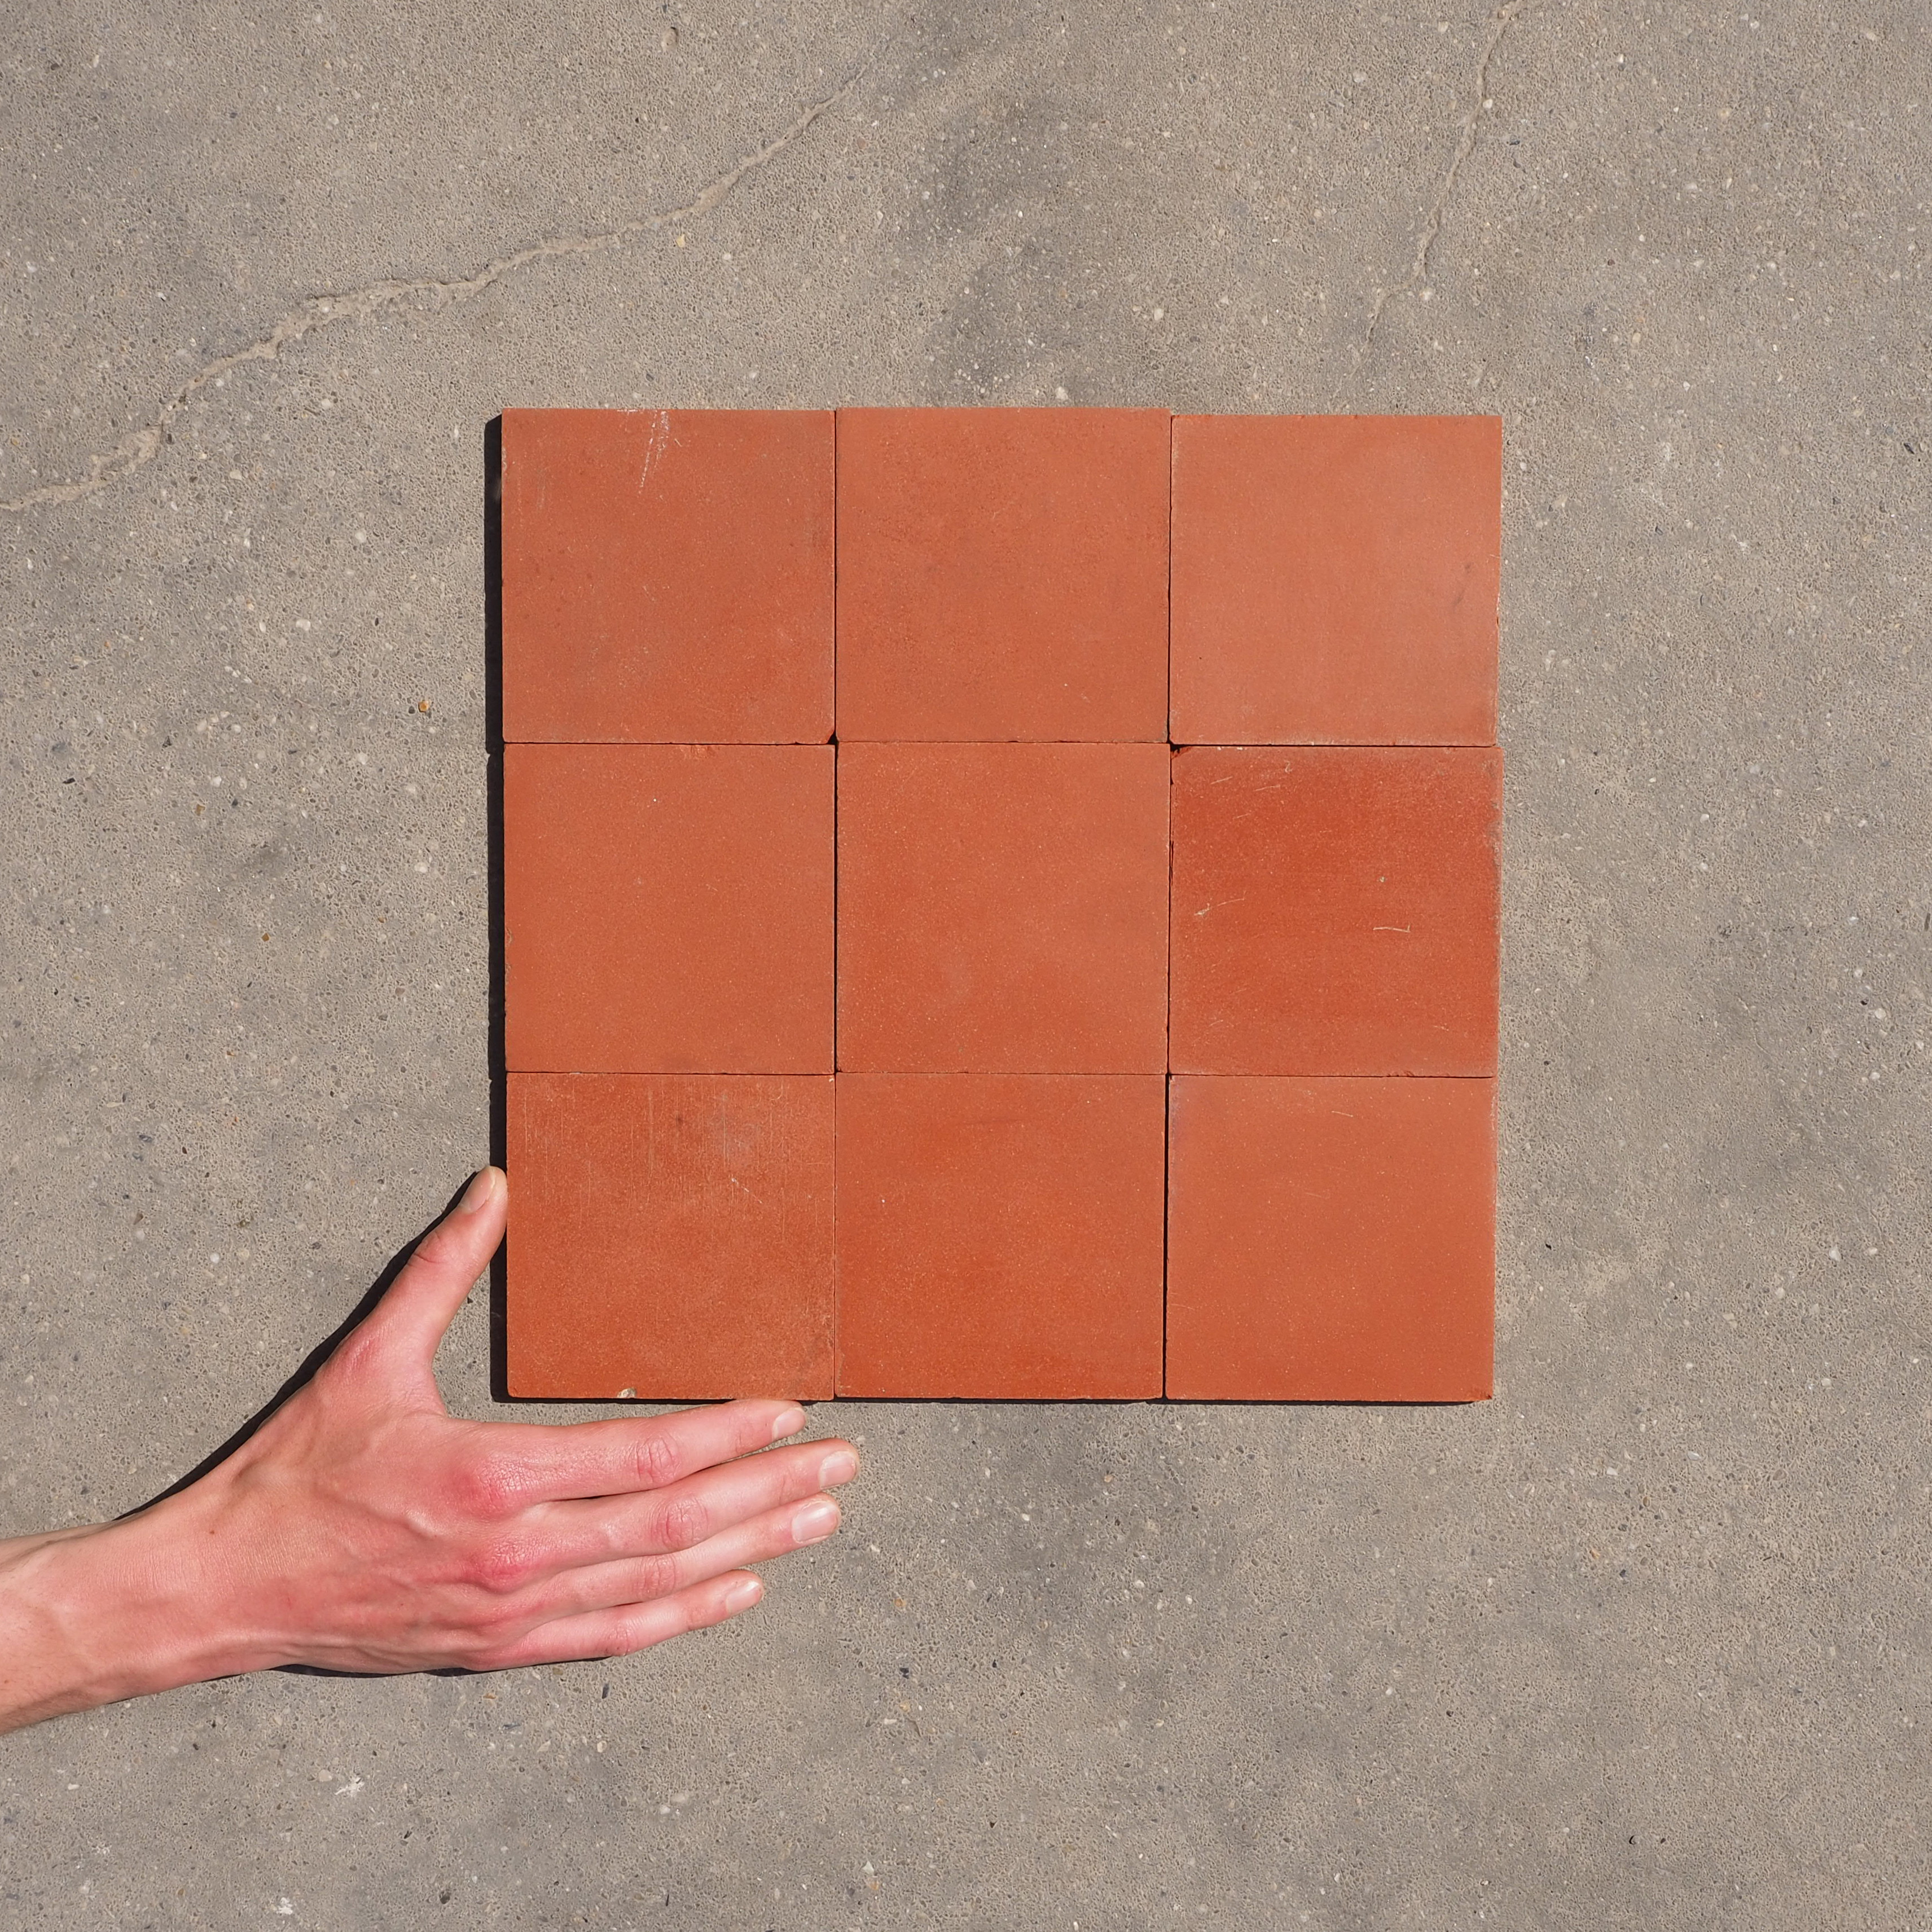 Red ceramic tiles (100 x 100 mm)